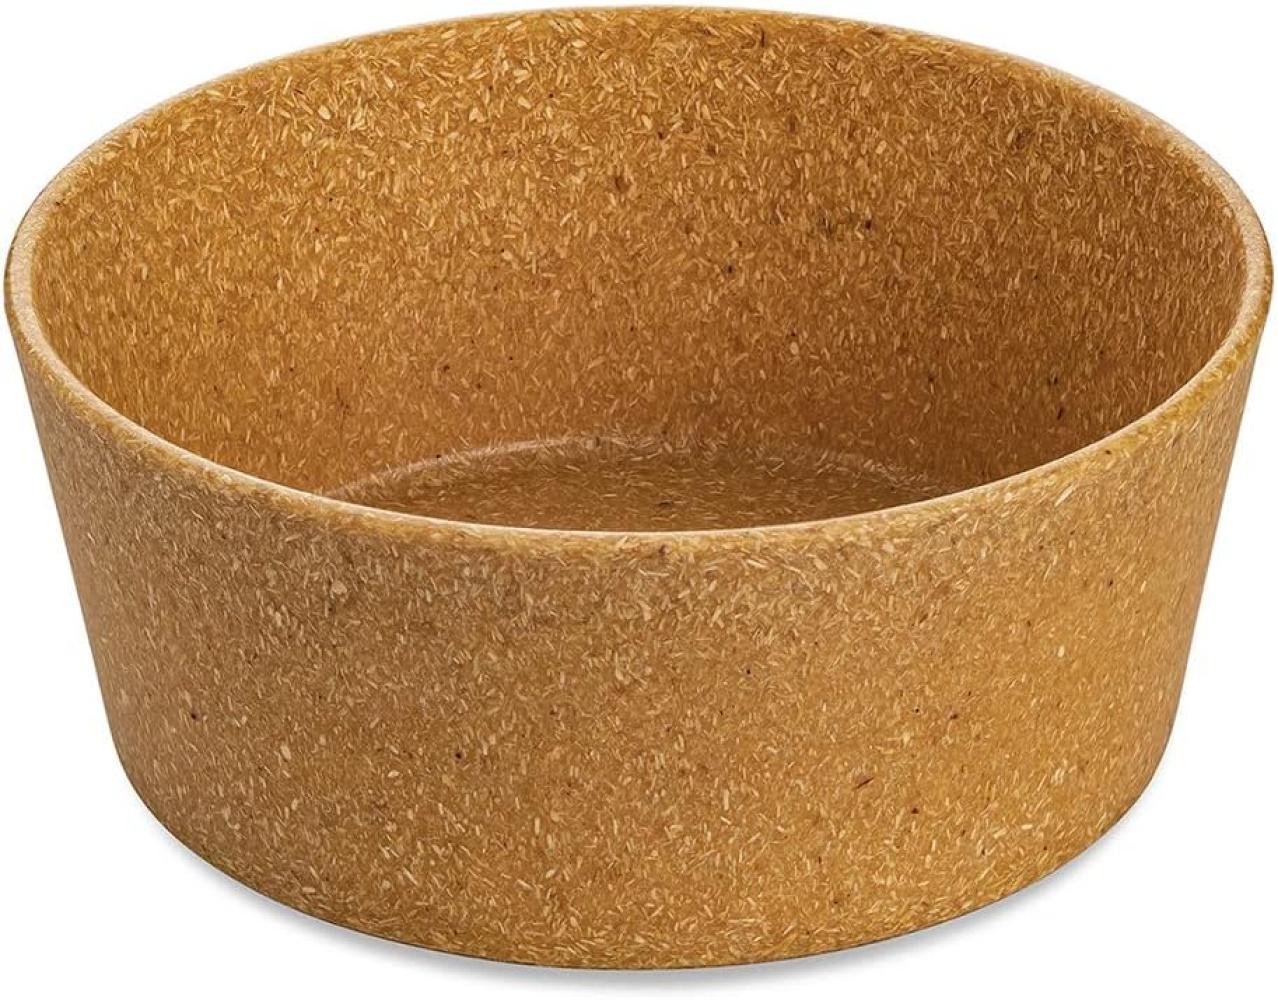 Koziol Schalen 2er-Set Connect Bowl, Schüsseln, Kunststoff-Holz-Mix, Nature Wood, 400 ml, 7102702 Bild 1